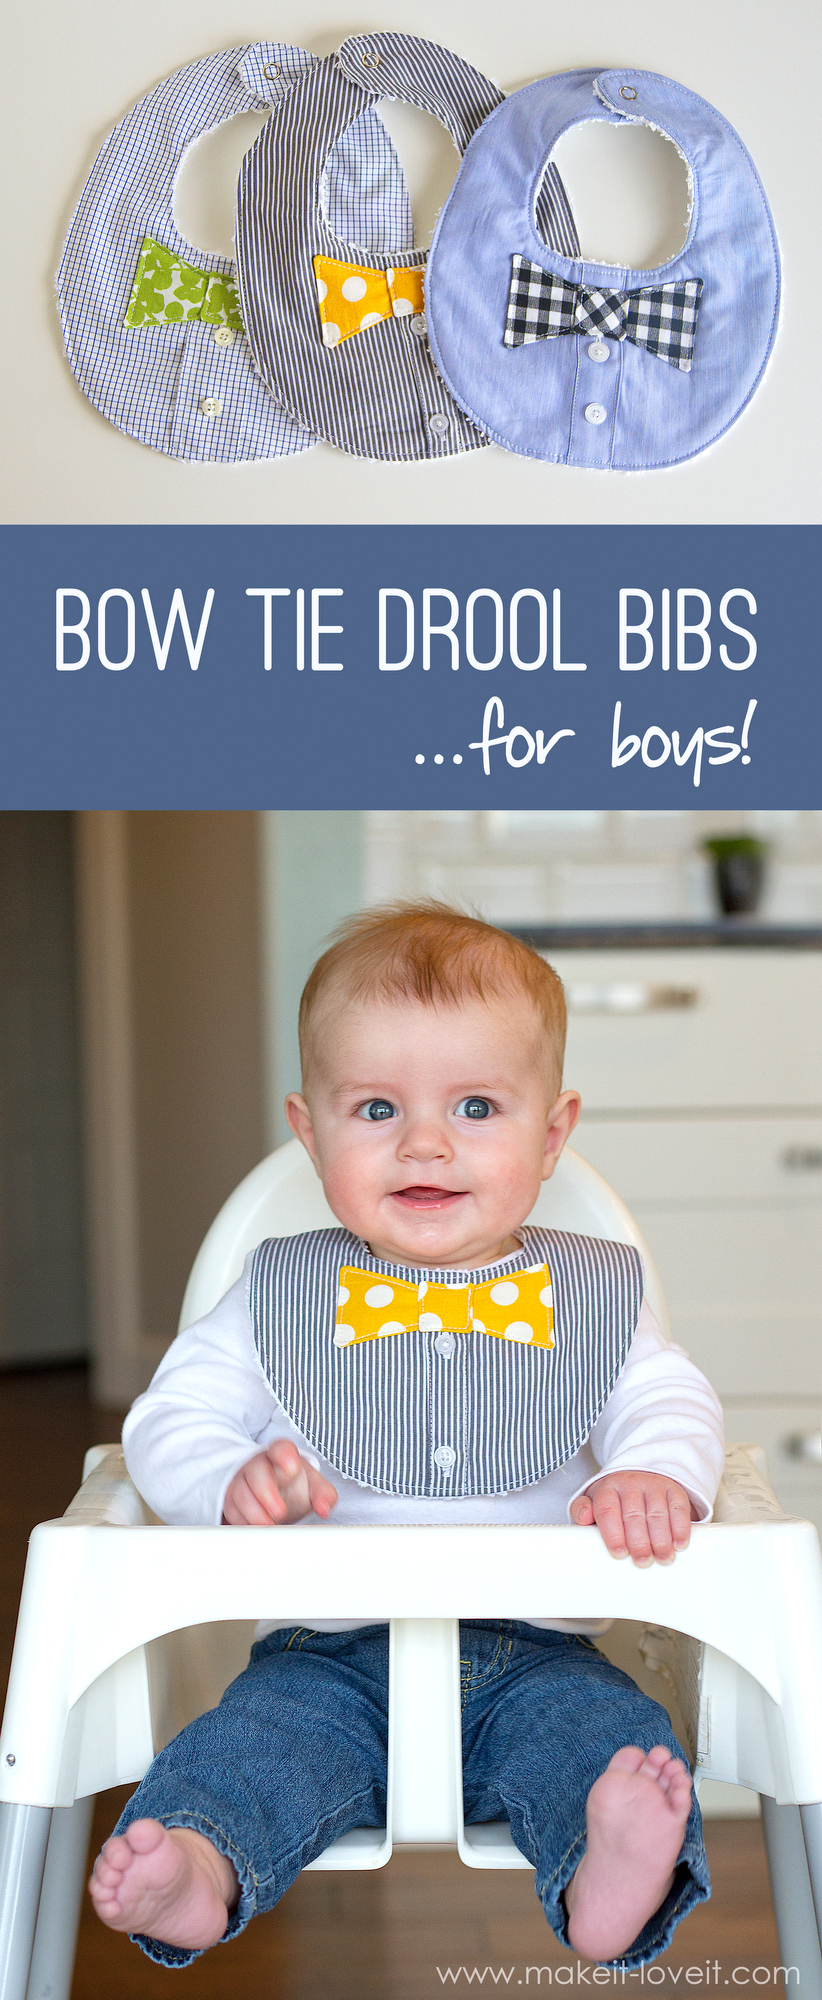 Bow tie bib tutorial